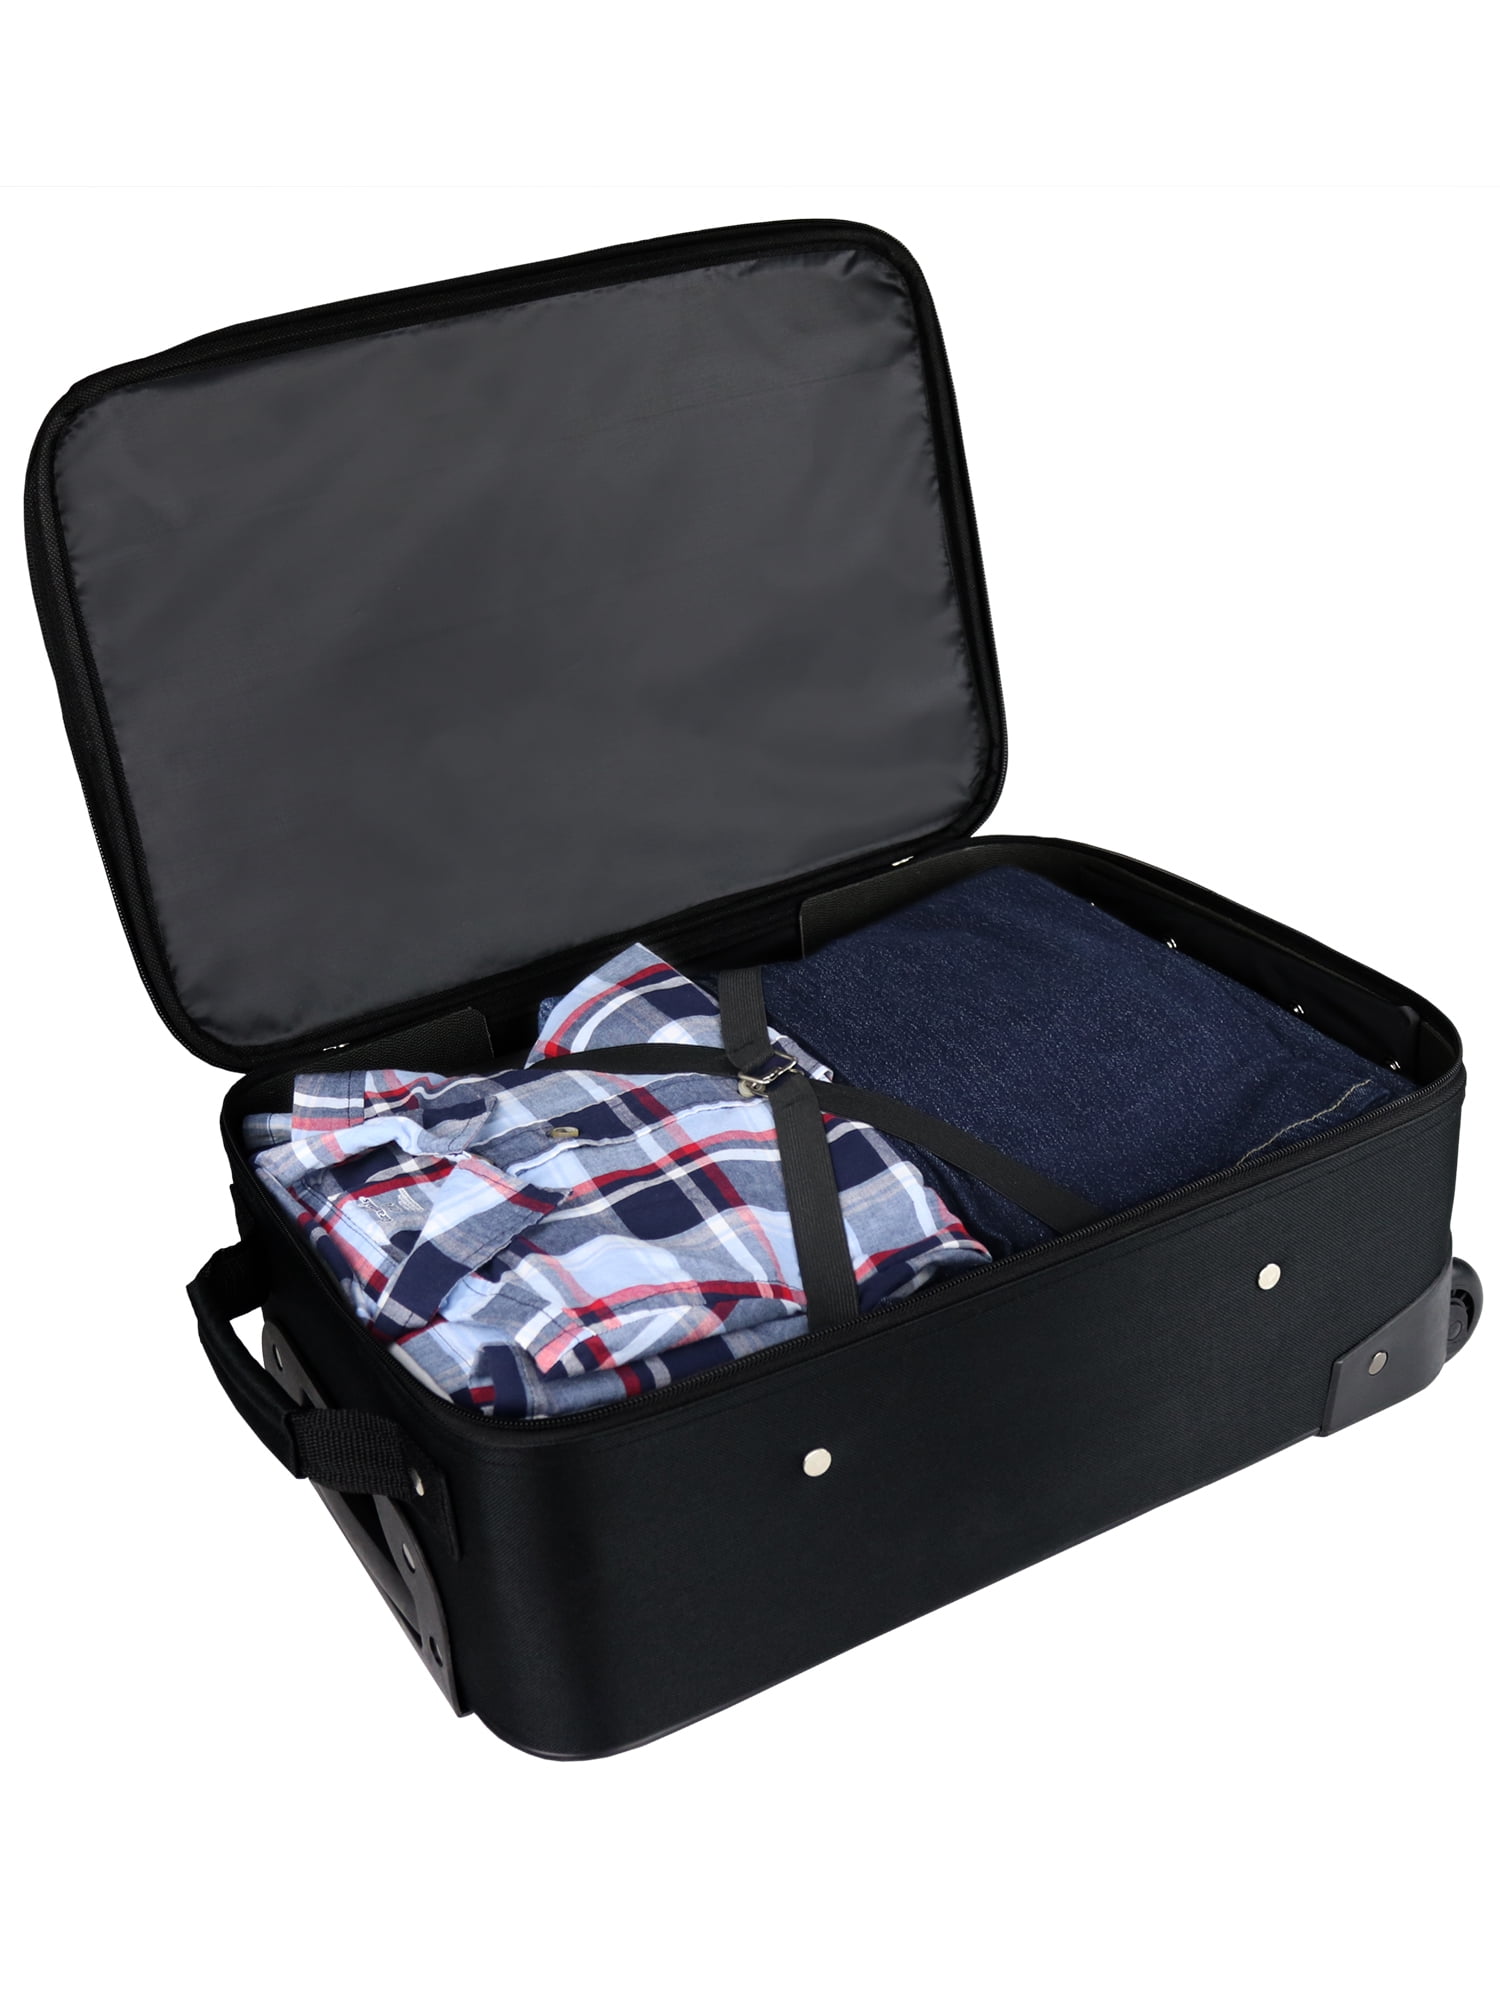 Black Protege 18 Pilot Case Carry On Luggage